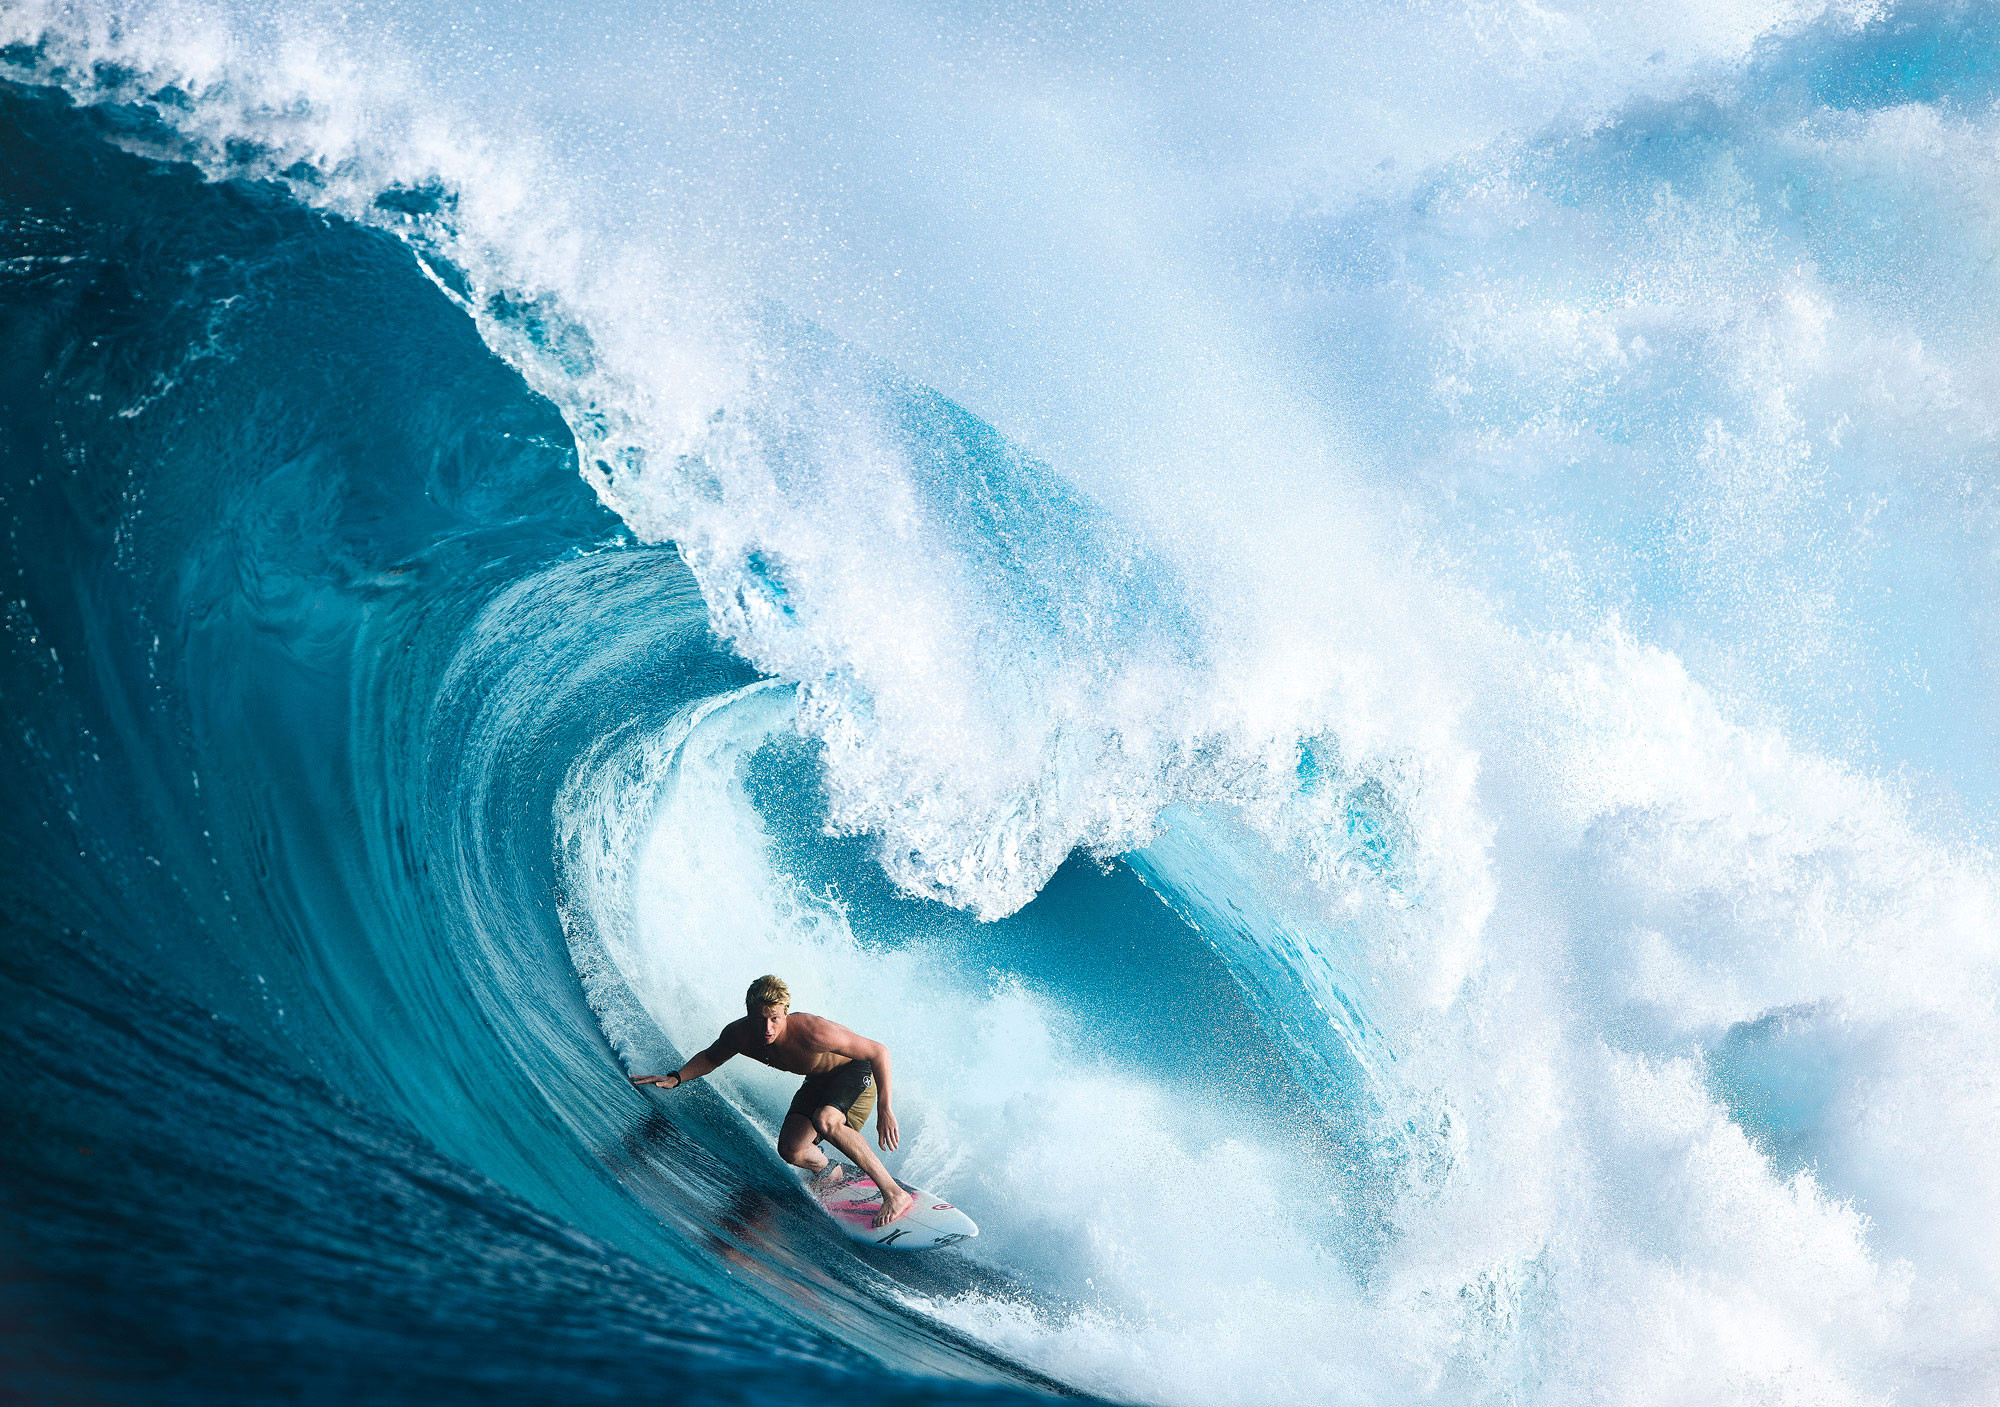 HD Surf Wallpaper